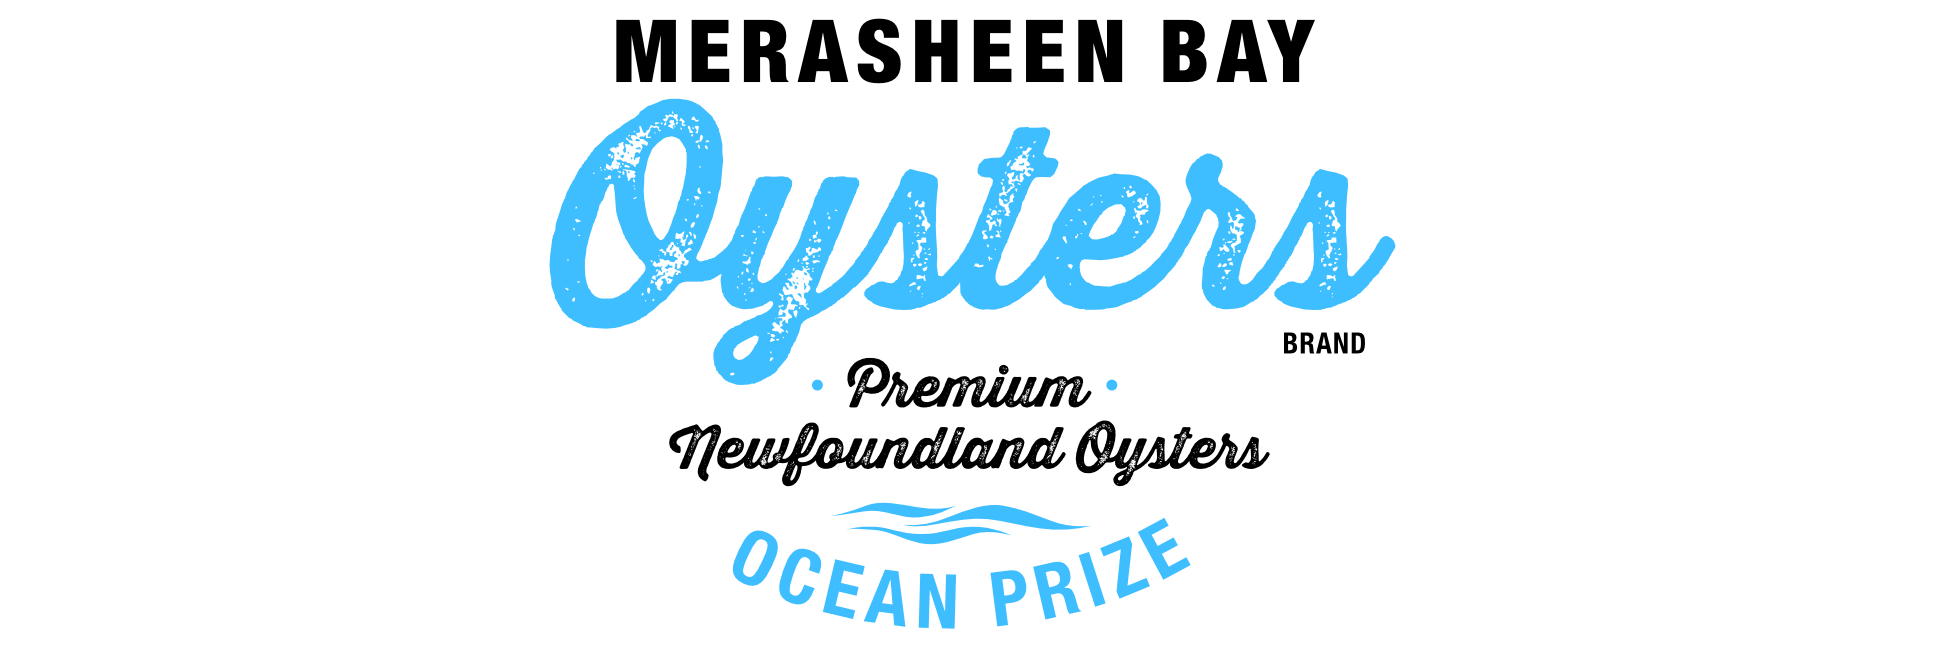 Marasheen Oysters